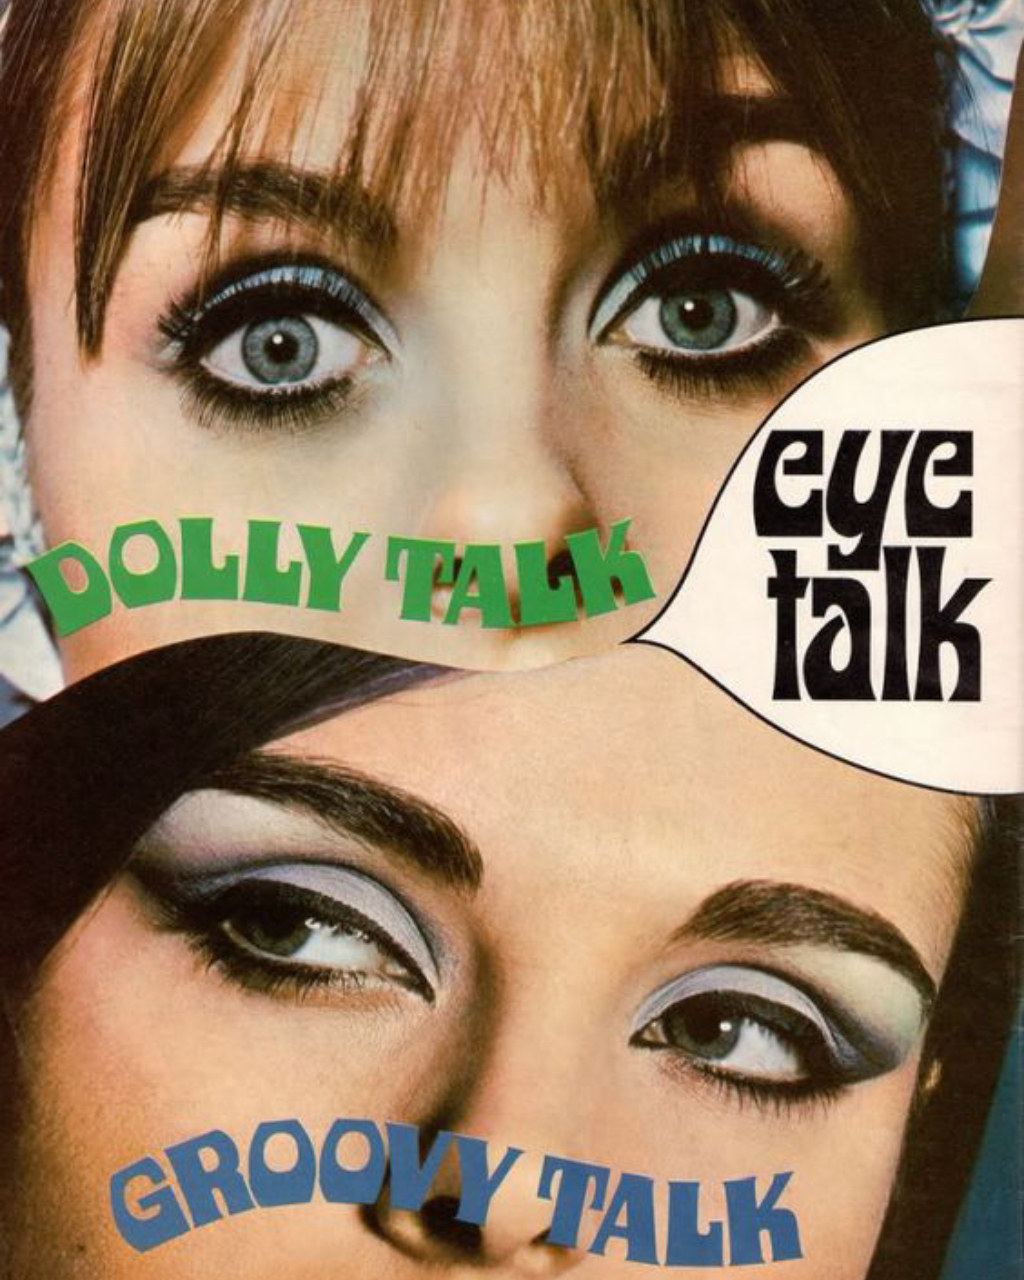 Eye talk 1960's eye makeup